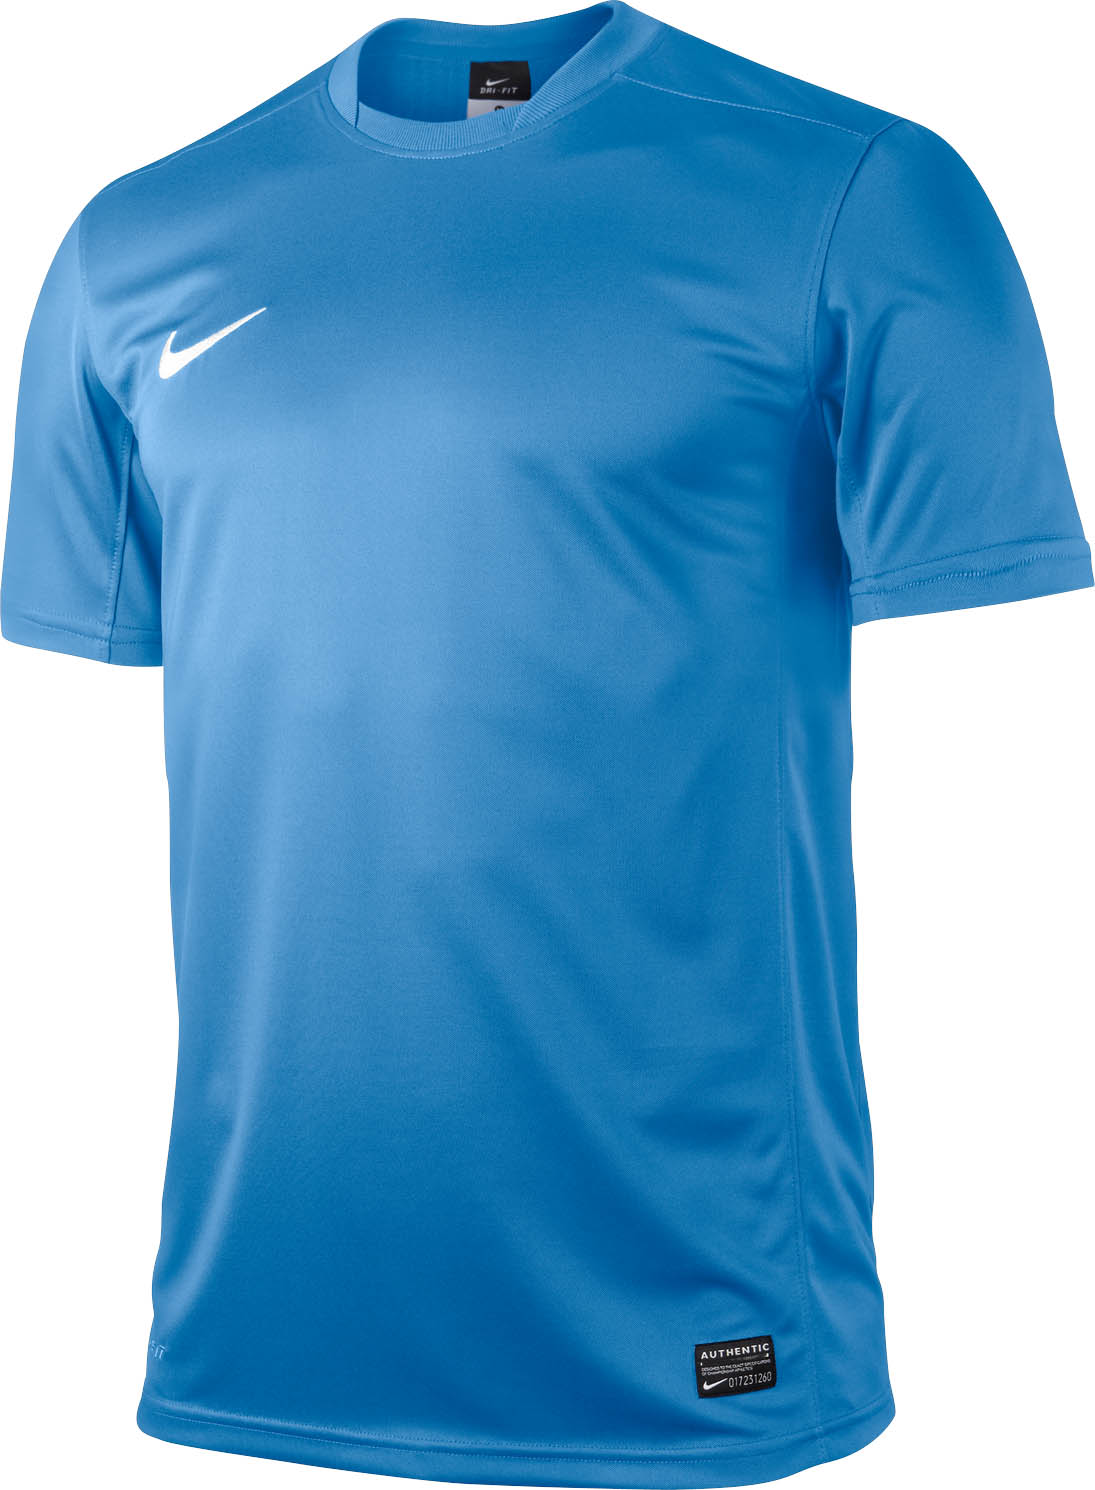 Nike 2015-16 Teamwear Kits Unveiled - Footy Headlines